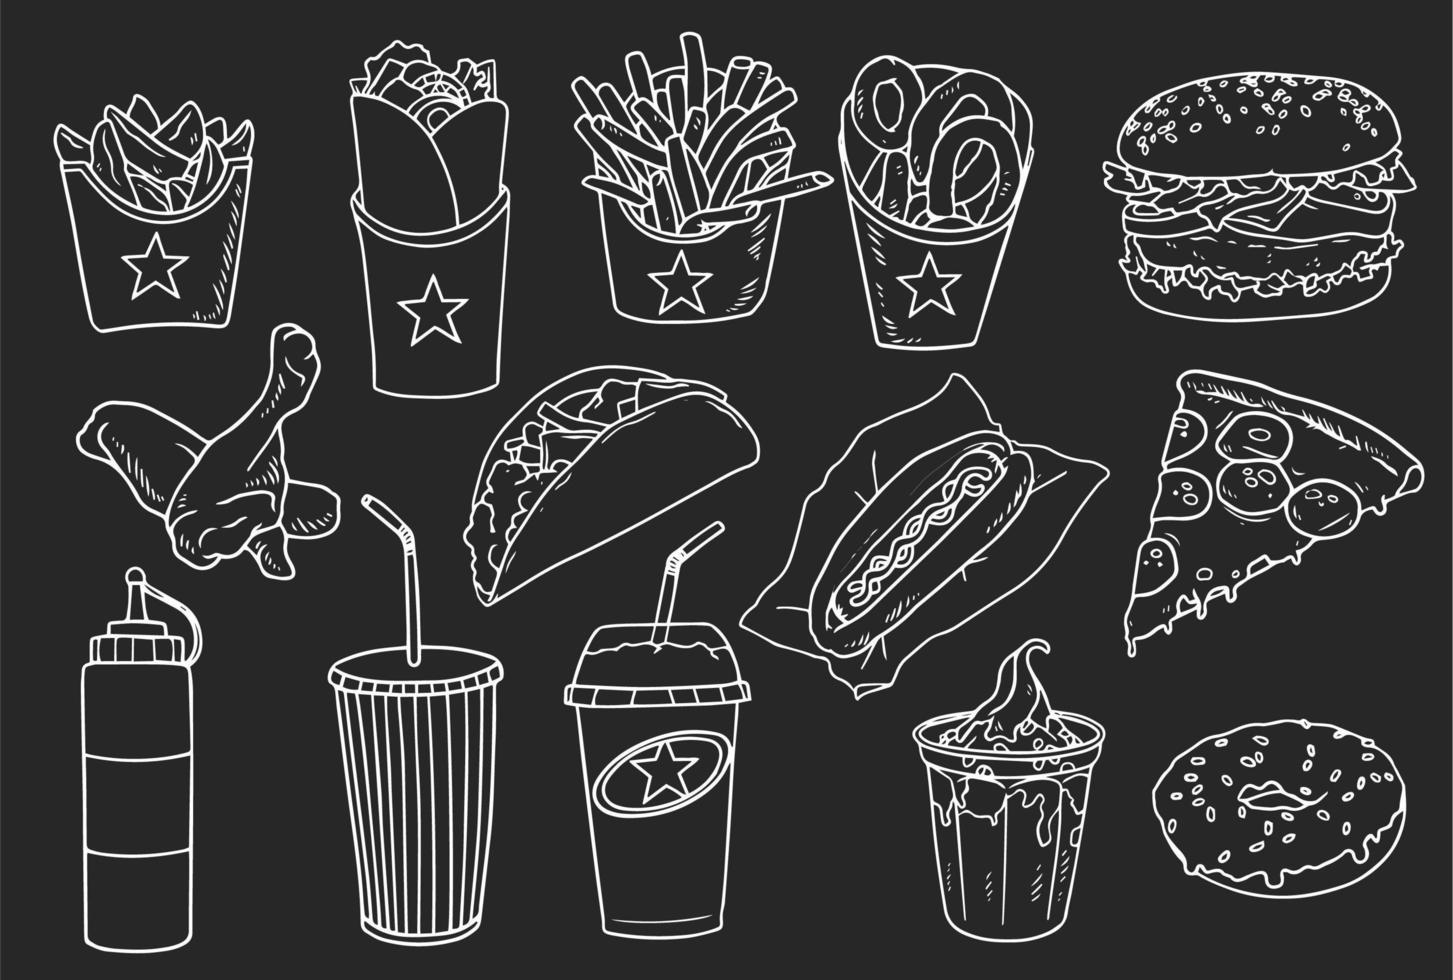 raccolta di elementi di fast food disegnati a mano vettore